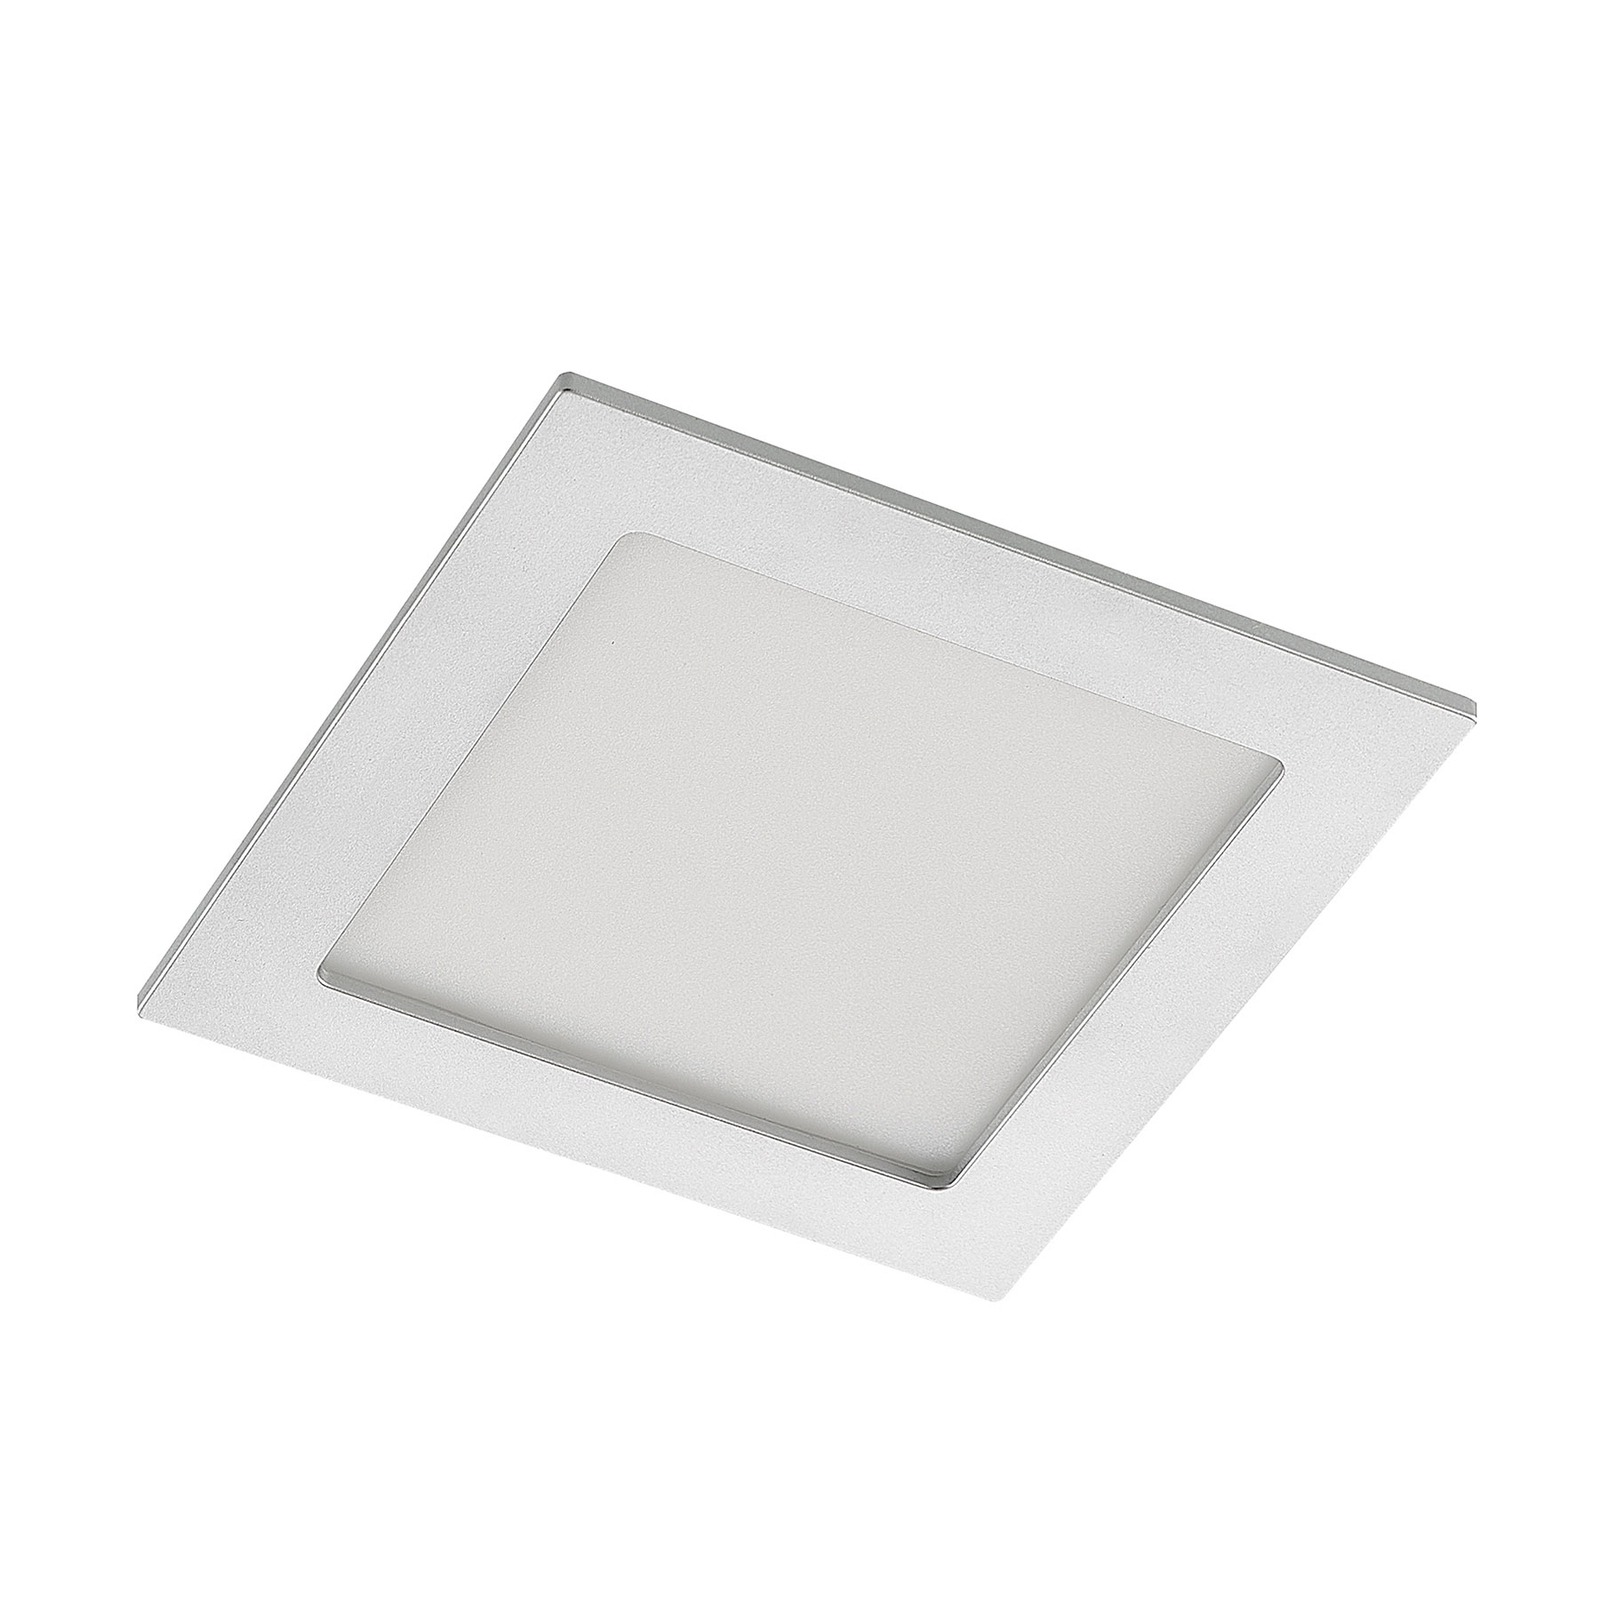 Prios LED-Einbaulampe Helina, silber, 16,5 cm, dimmbar